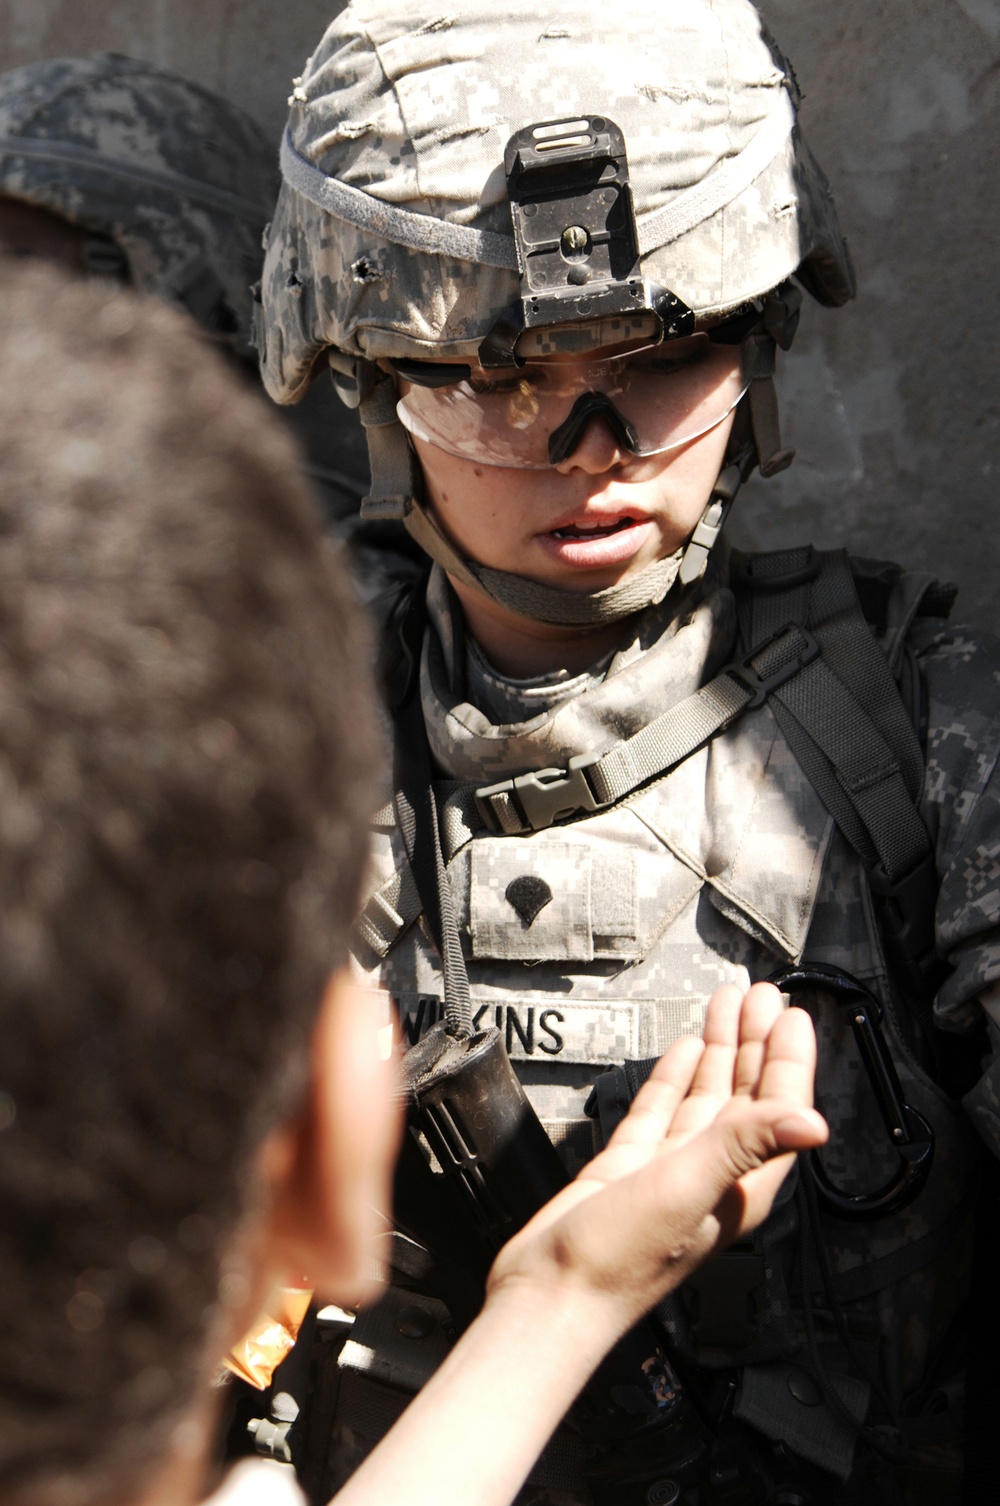 Iraqi, U.S. soldiers conduct medical assistance program